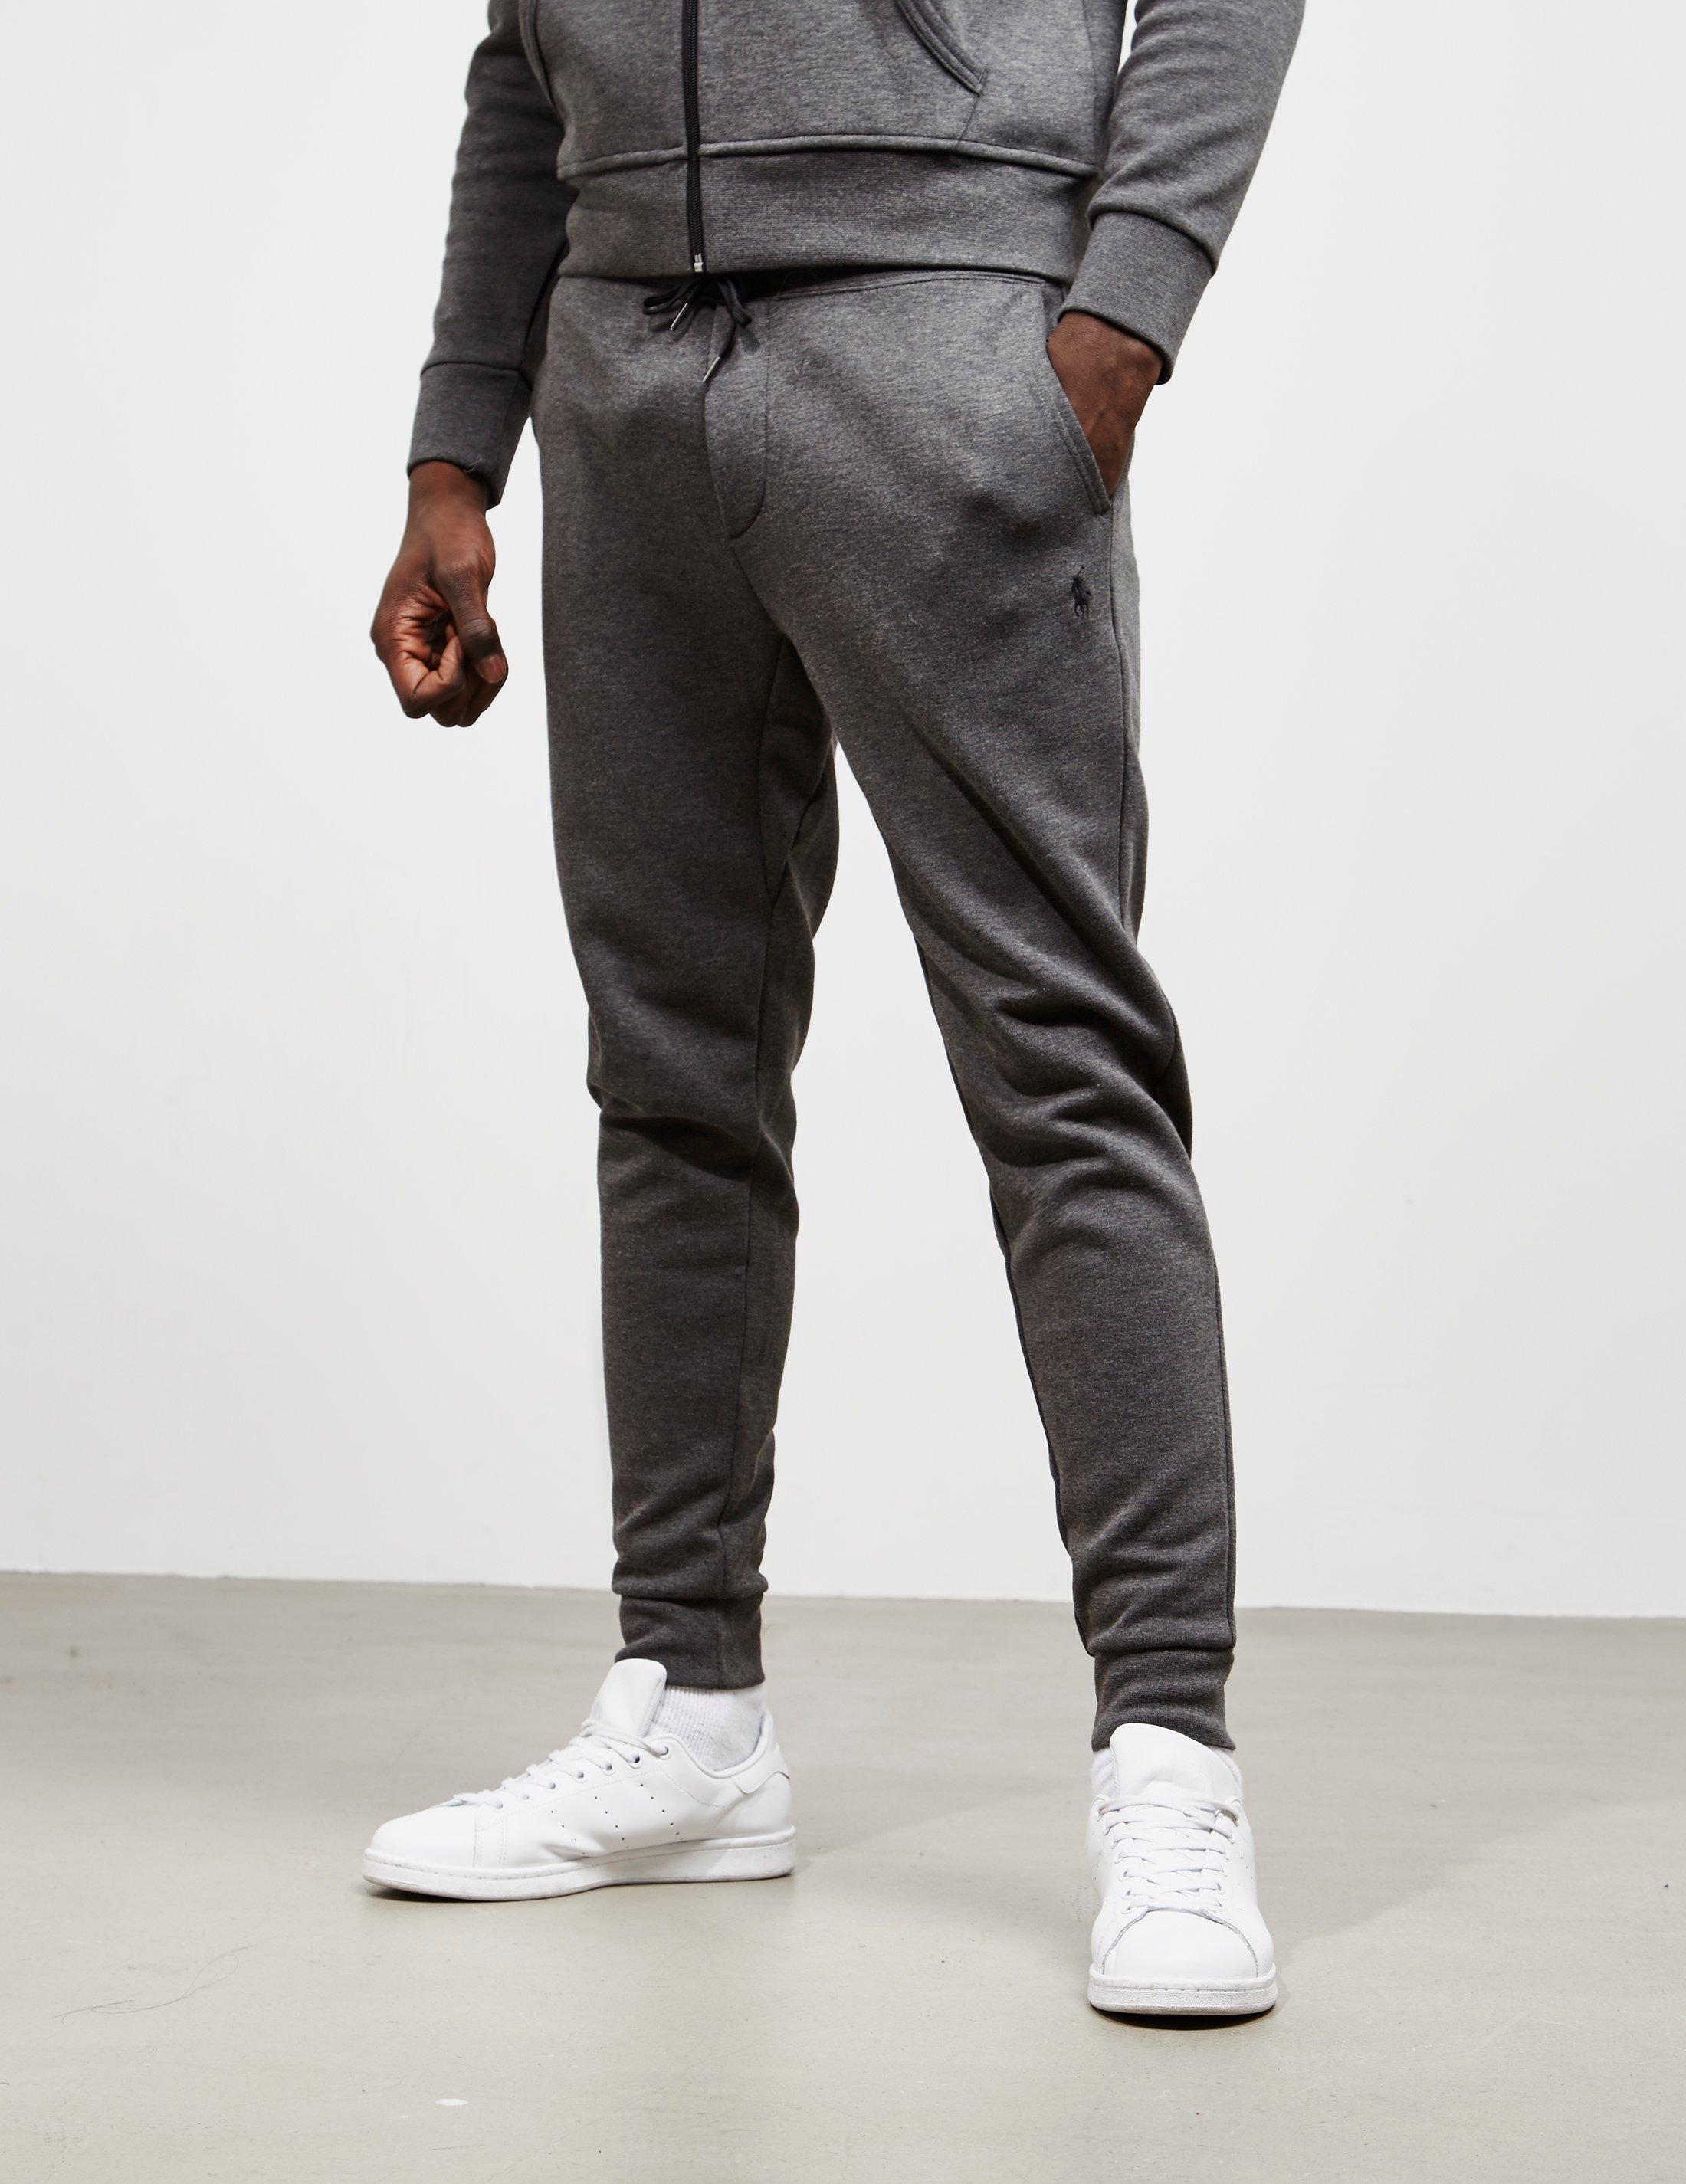 Lyst - Polo Ralph Lauren Basic Fleece Track Pants Grey in Gray for Men